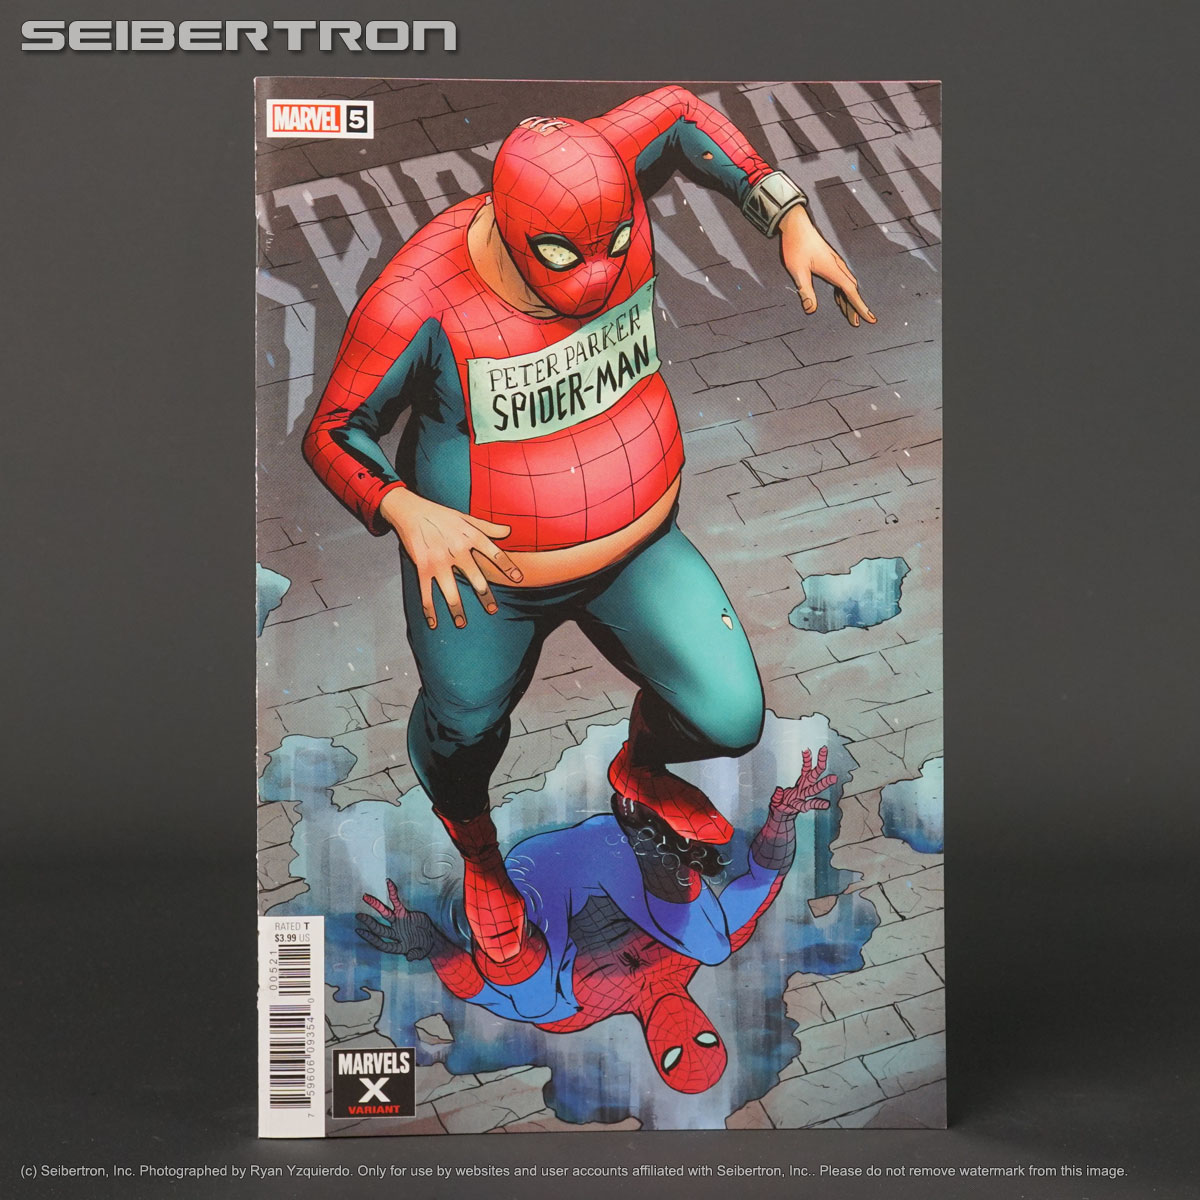 SPIDER-MAN #5 (of 5) var Marvels X Marvel Comics 2020 NOV190911 (CA) Rodriguez